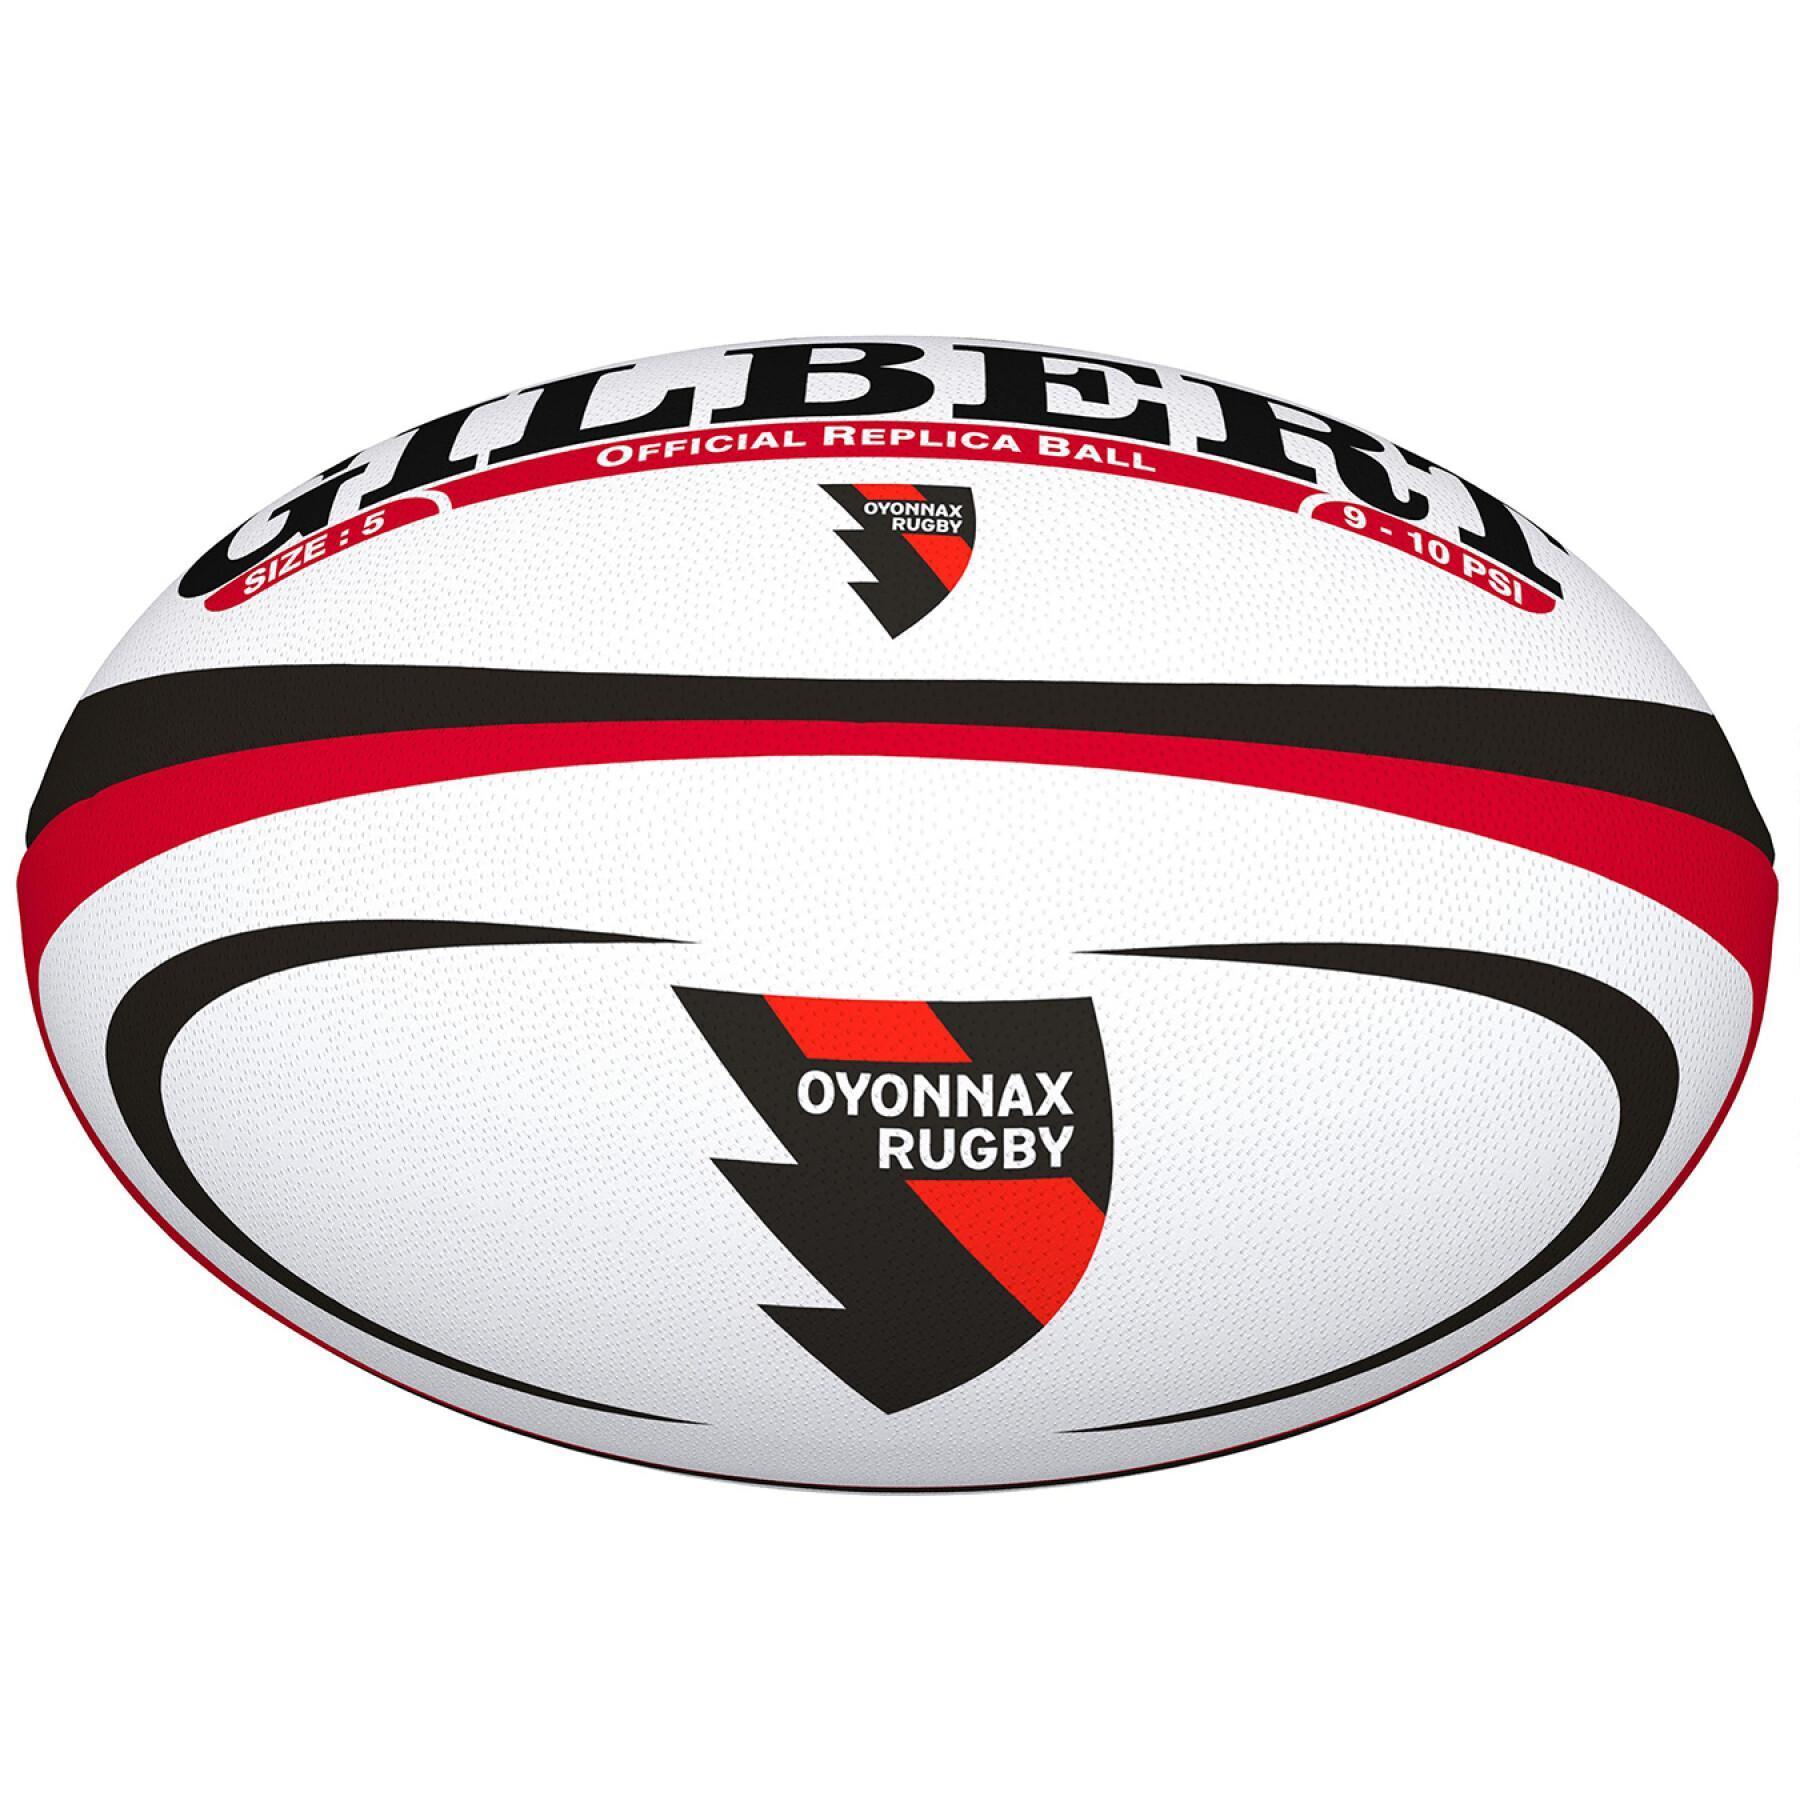 Rugby ball Oyonnax